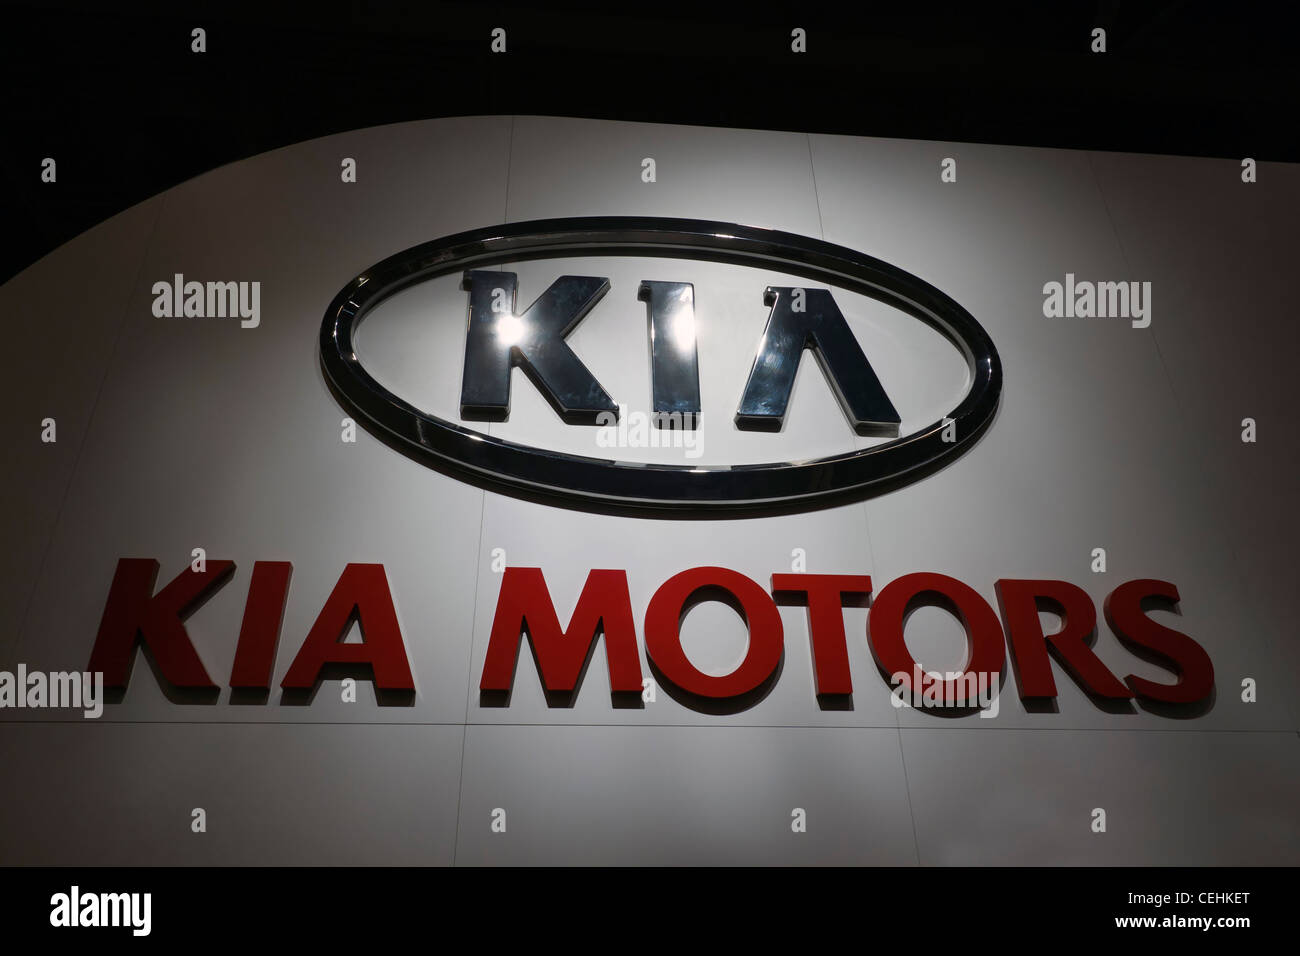 HOUSTON - JANUARY 2012: The KIA logo sign at the Houston International Auto Show on January 28, 2012 in Houston, Texas. Stock Photo